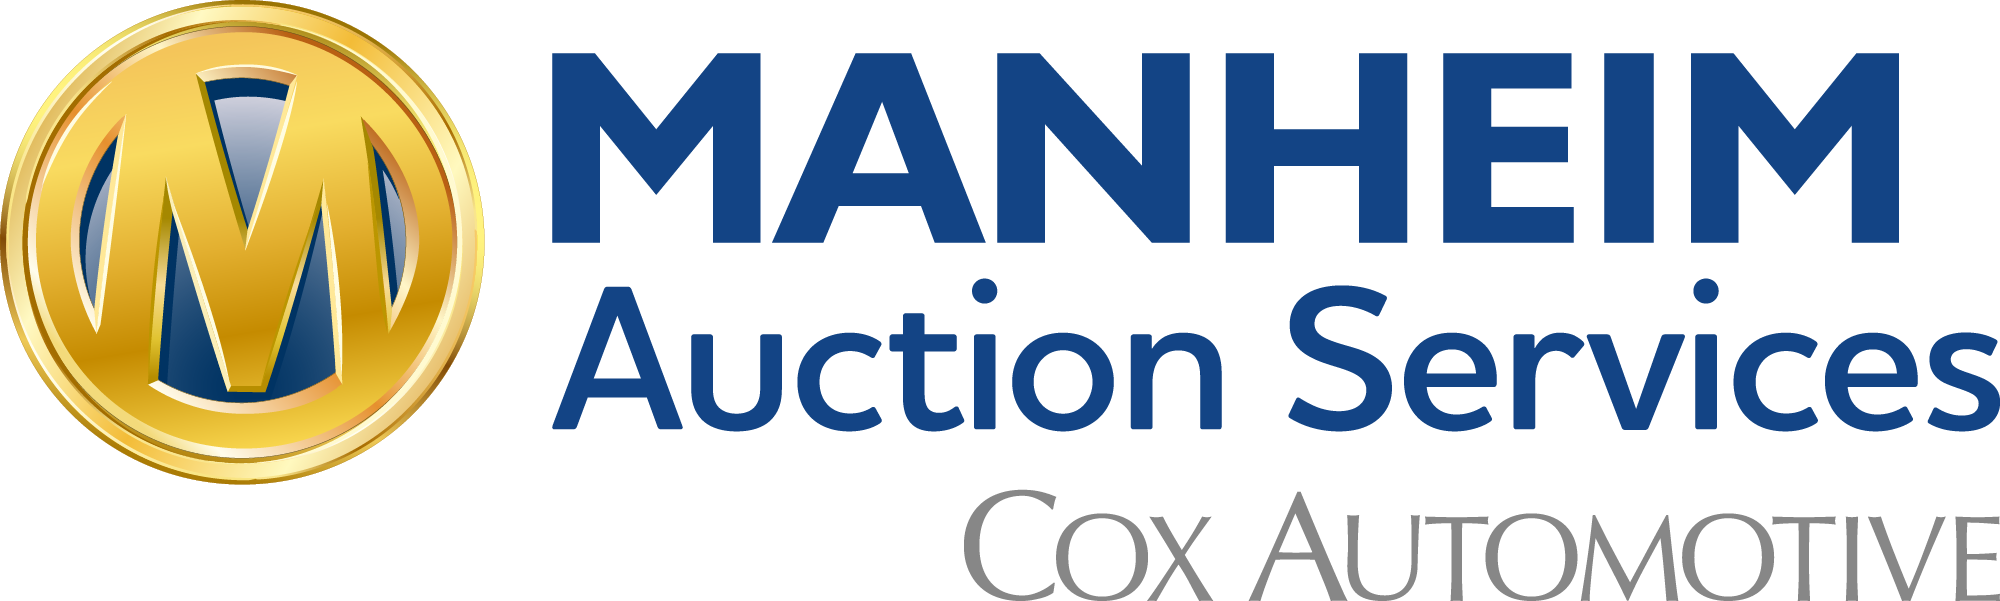 Manheim Auction Services